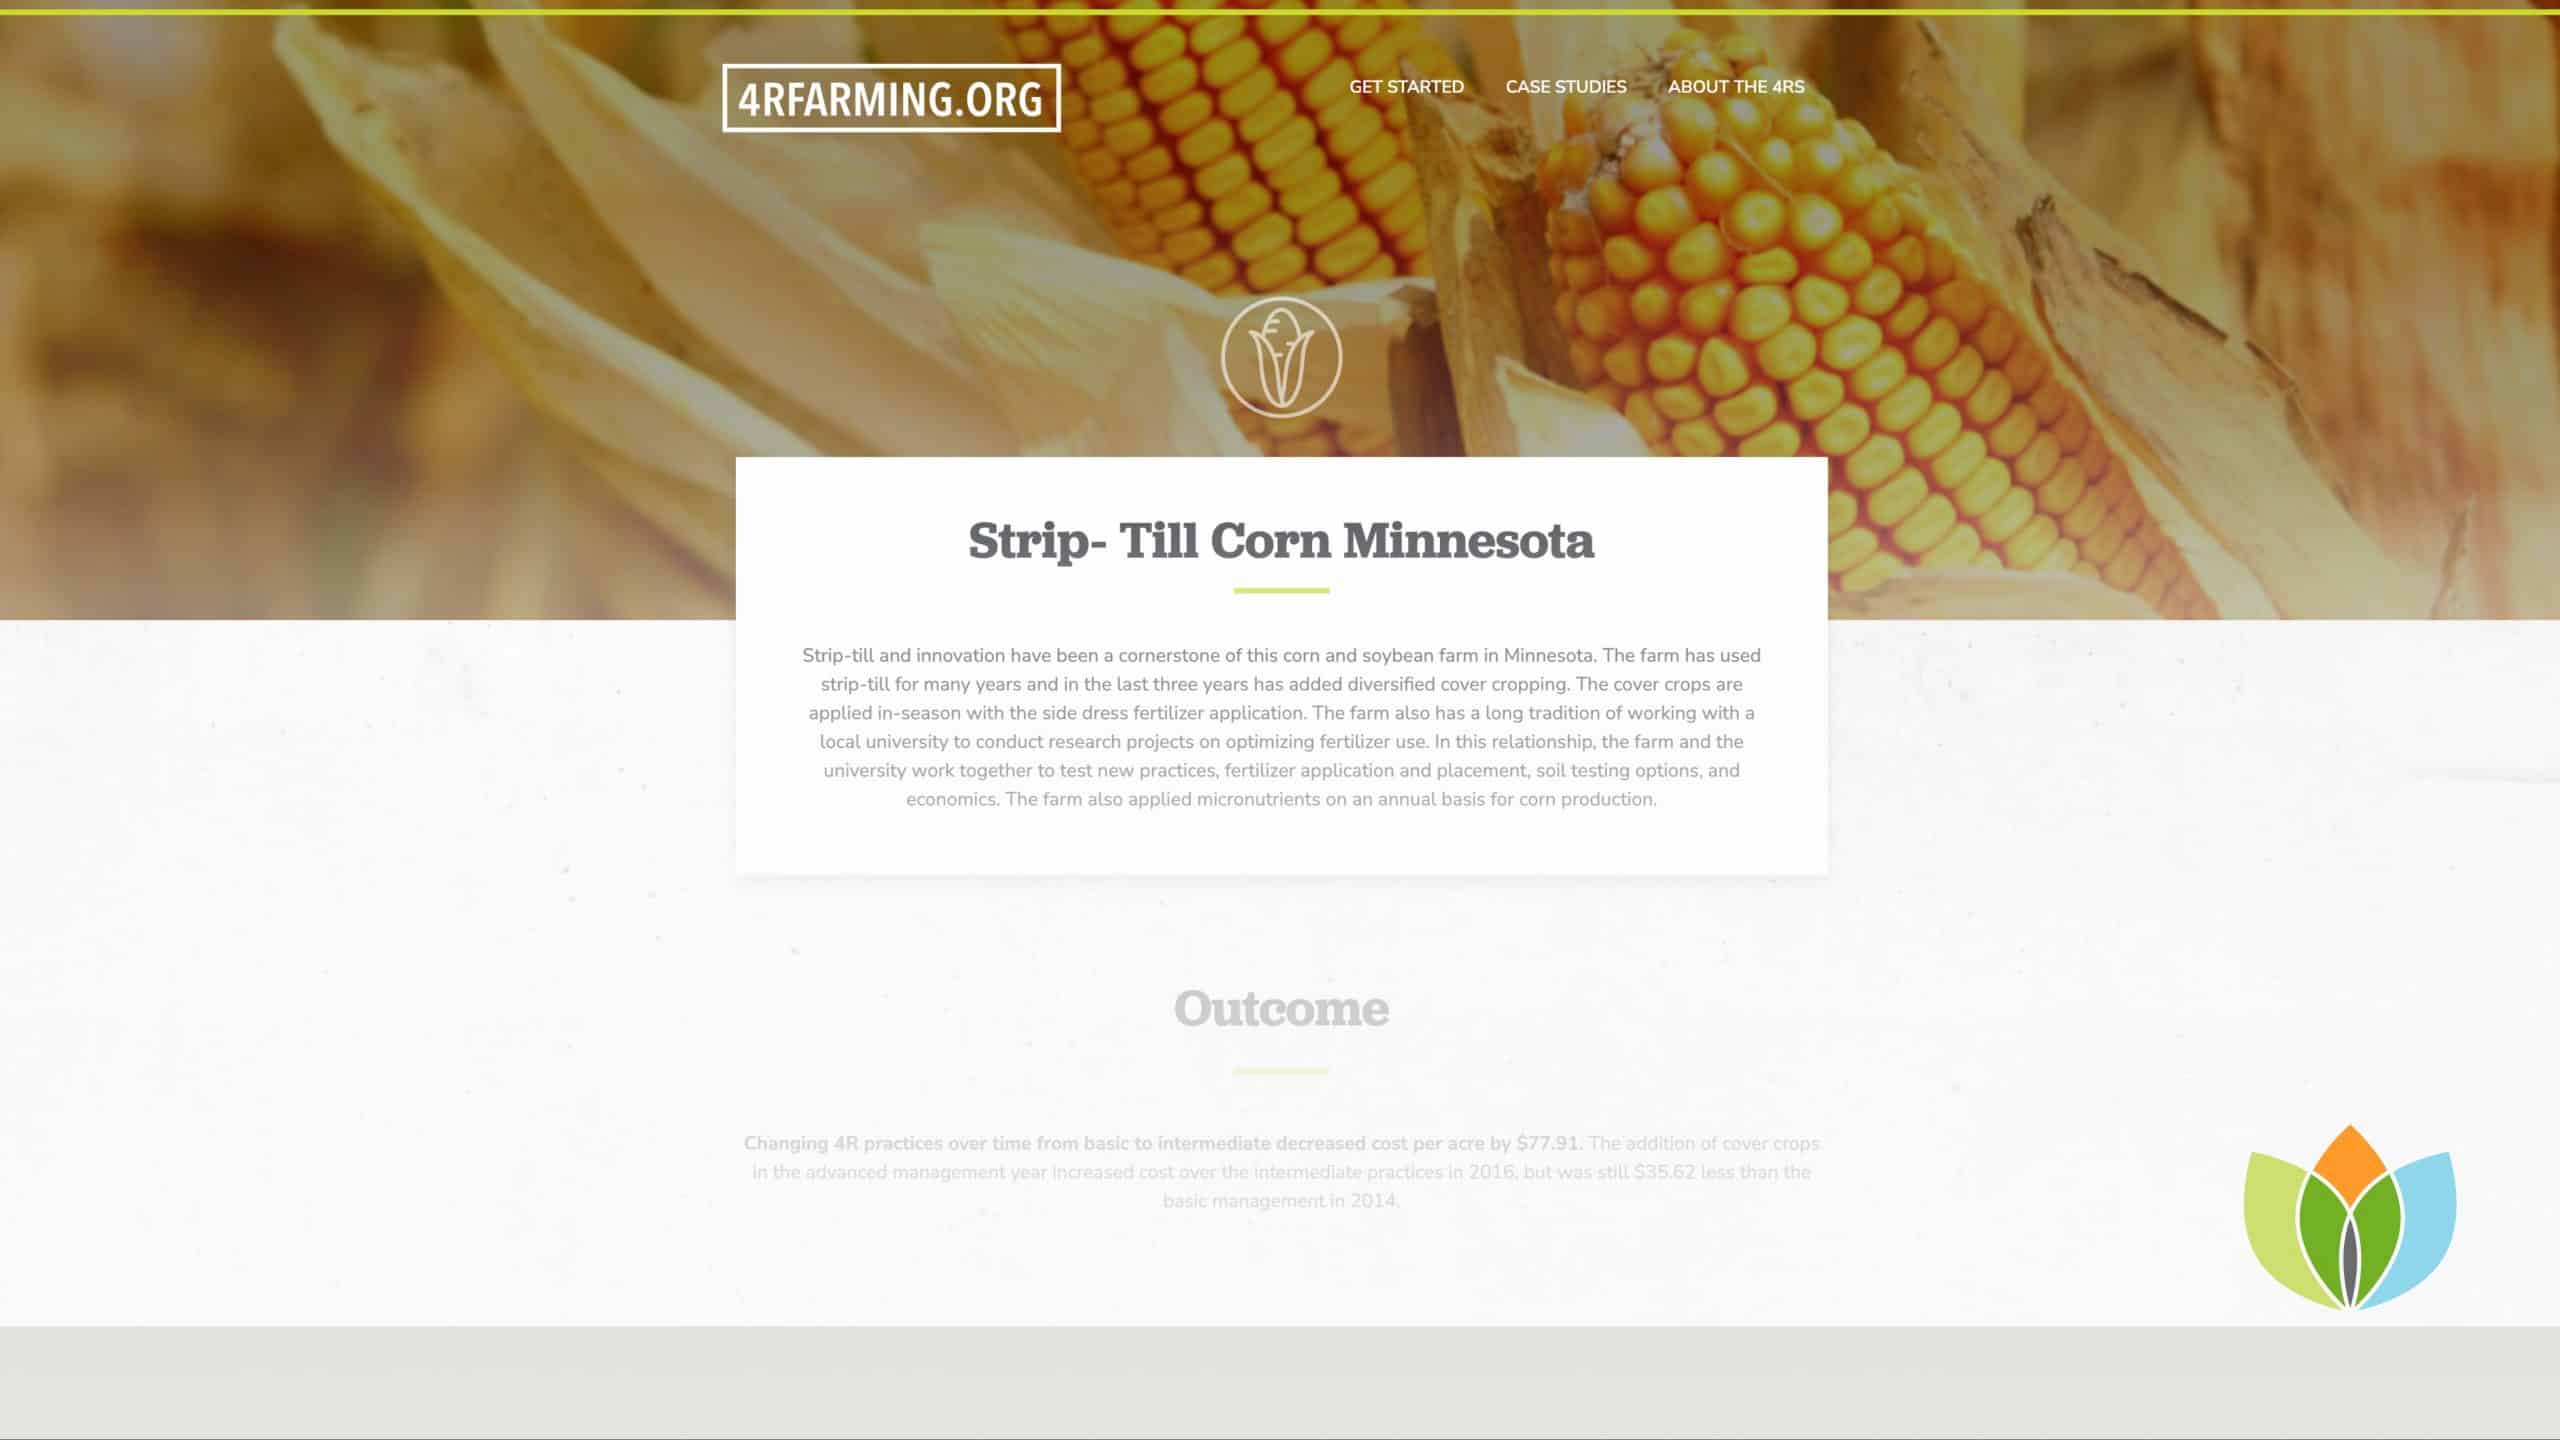 Strip-till and innovation are cornerstone of Minnesota corn farm's 4R approach